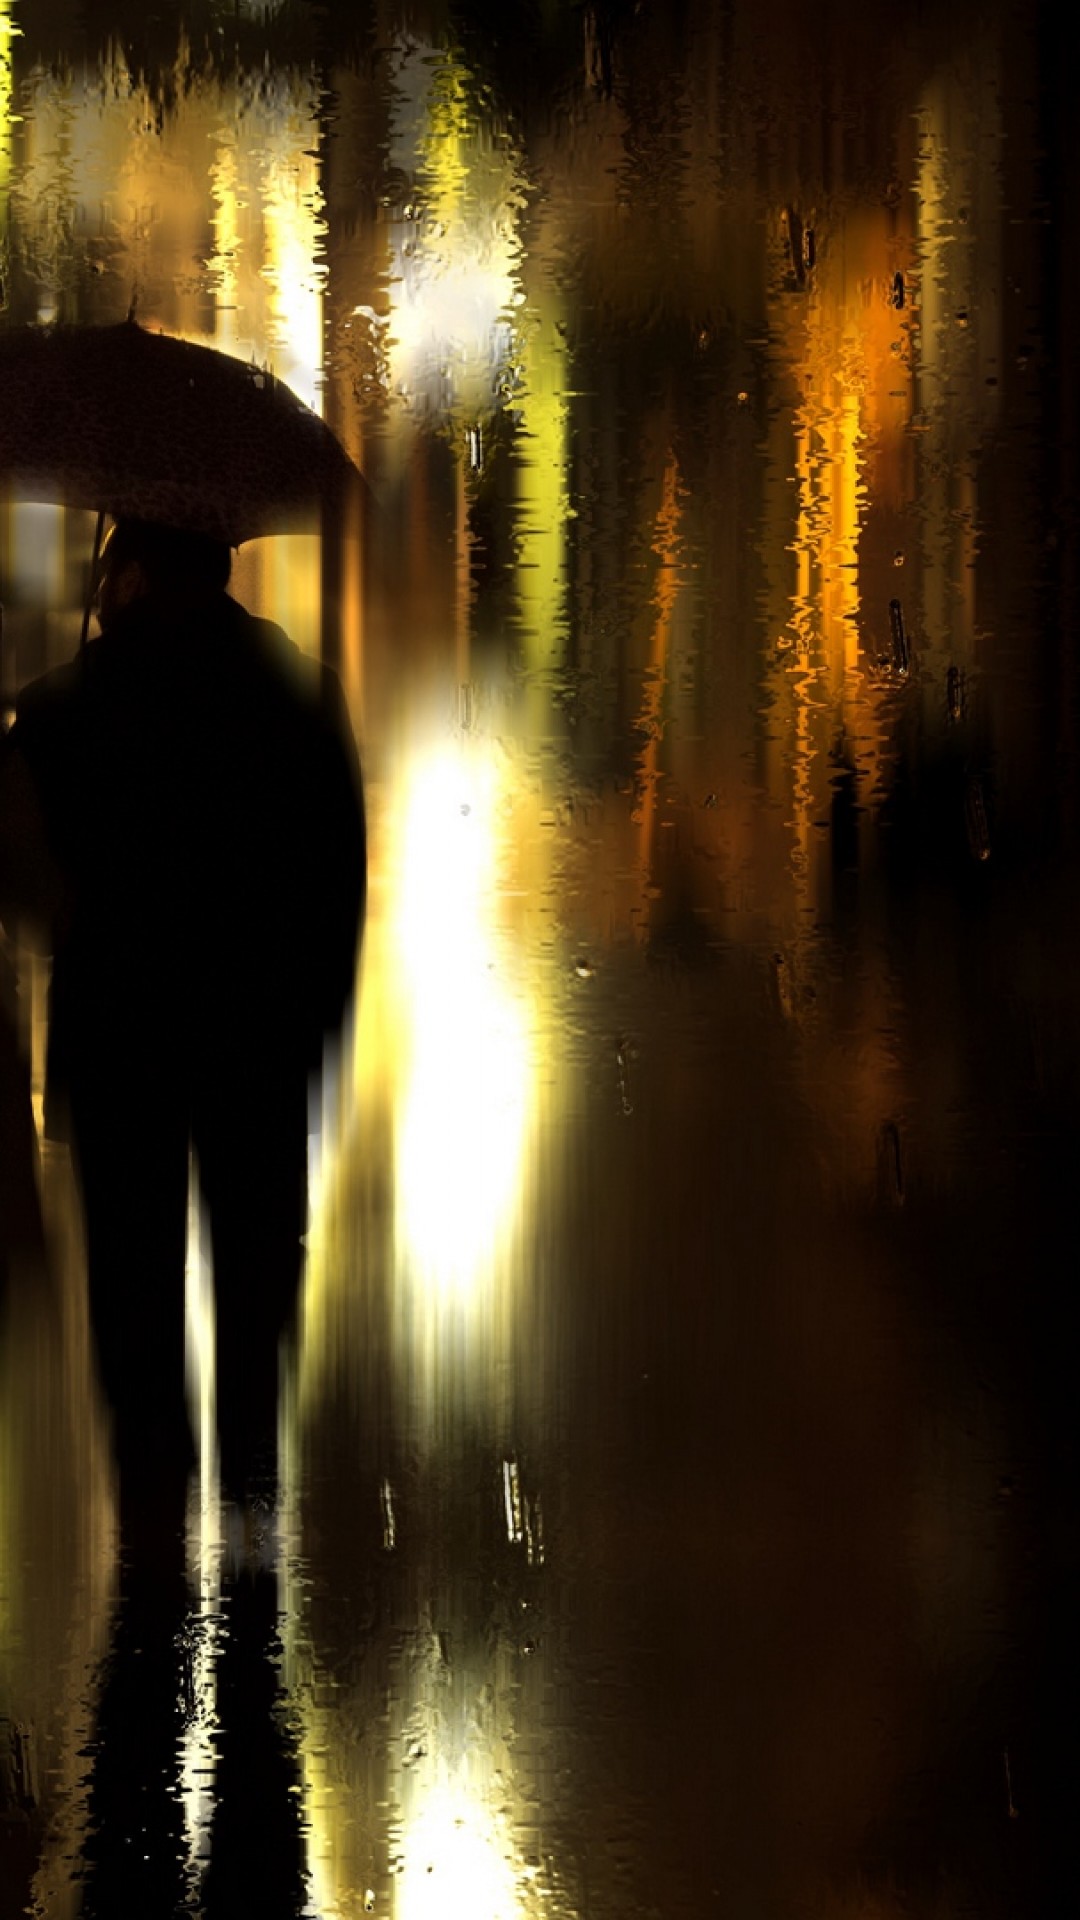 Coupl walking on a rainy night HD Wallpaper